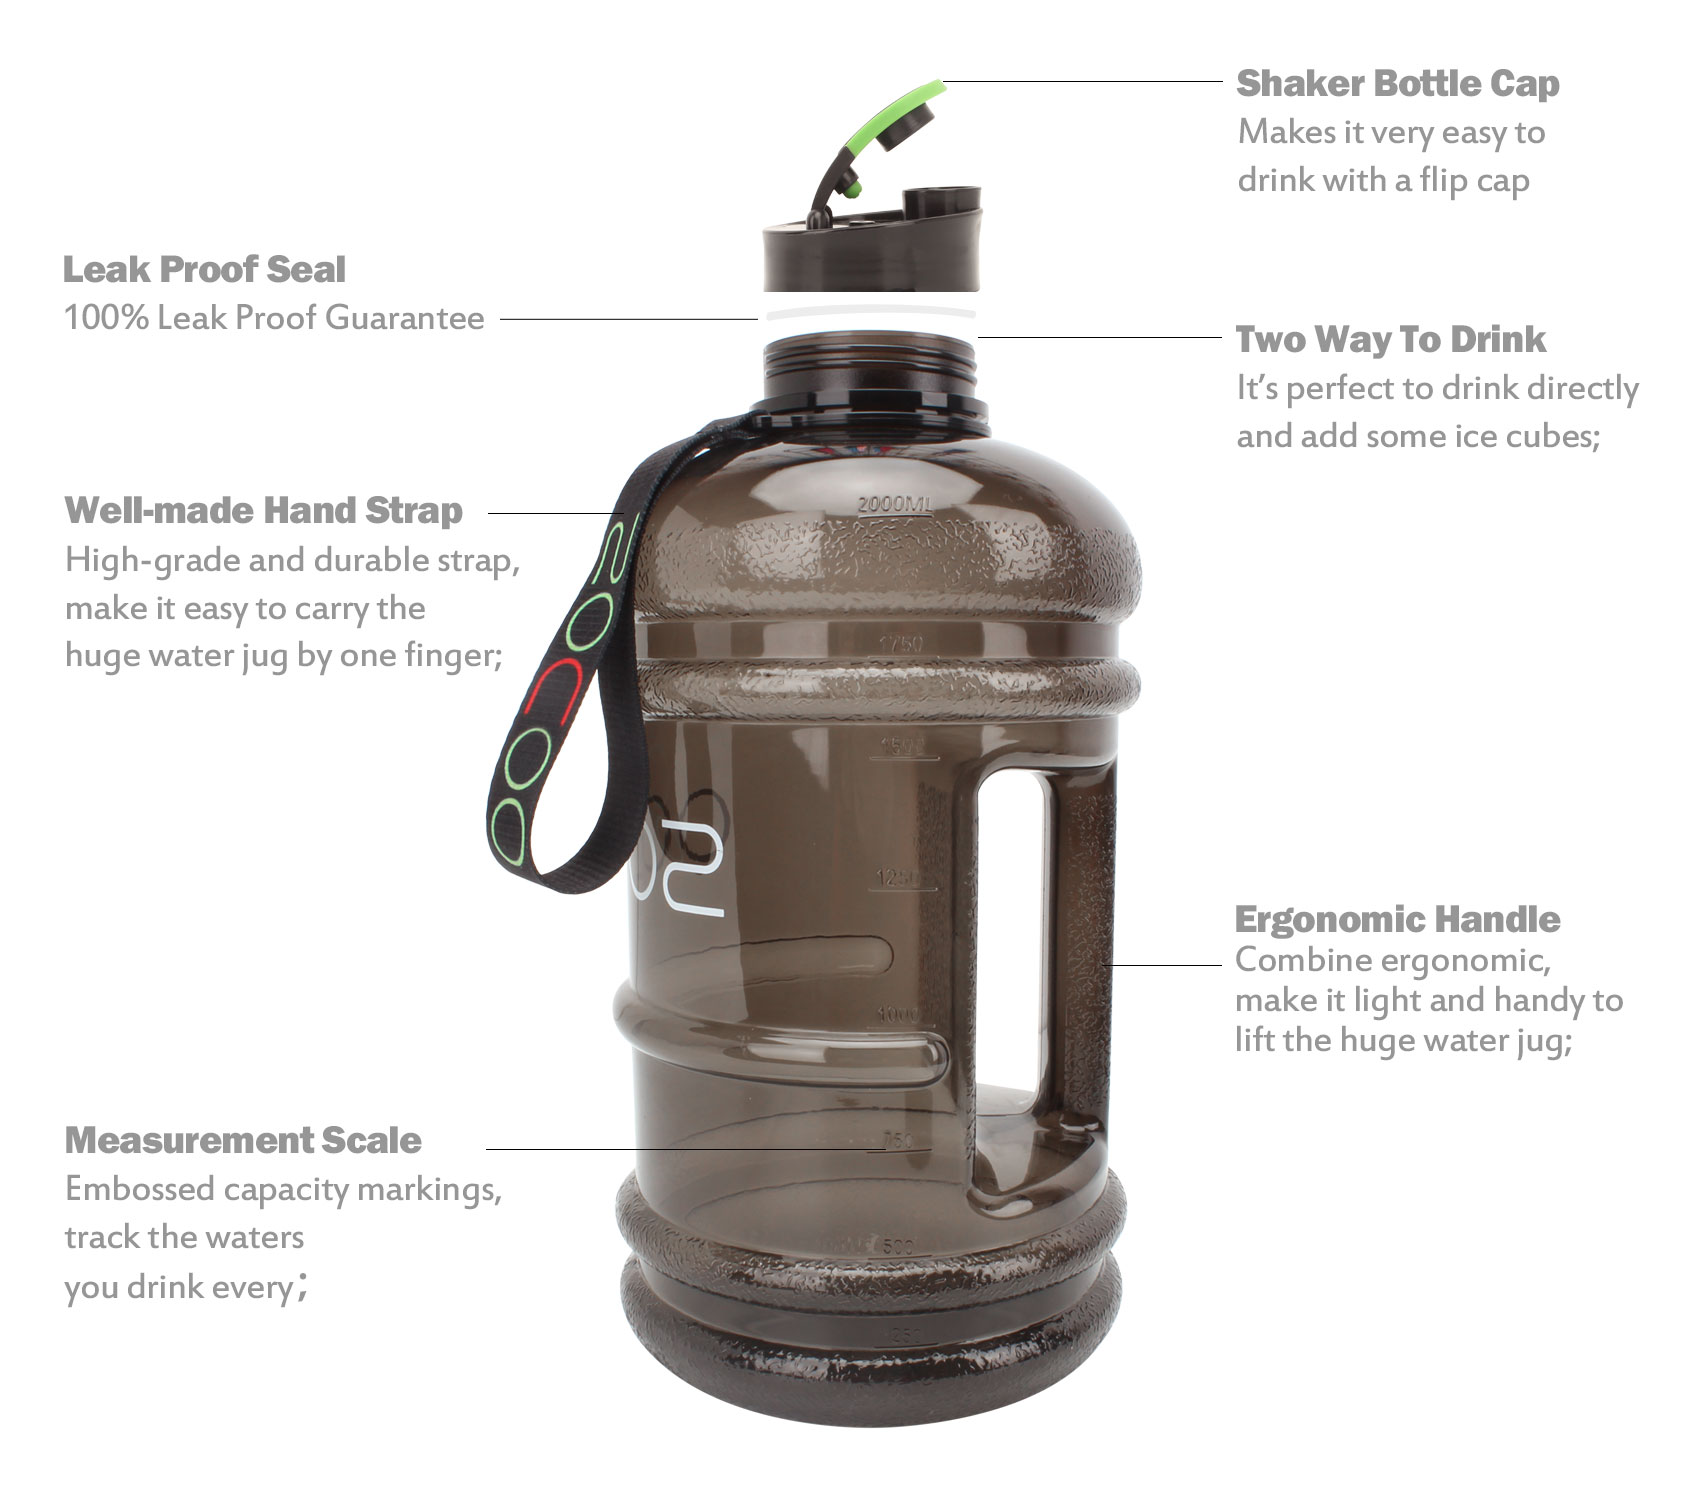 FUNUS Big Water Bottle BPA Free Half Gallon Water Bottle Jug with Straw for  Men Women Fitness Sport (Navy Blue, 2.2L) – SOCOO